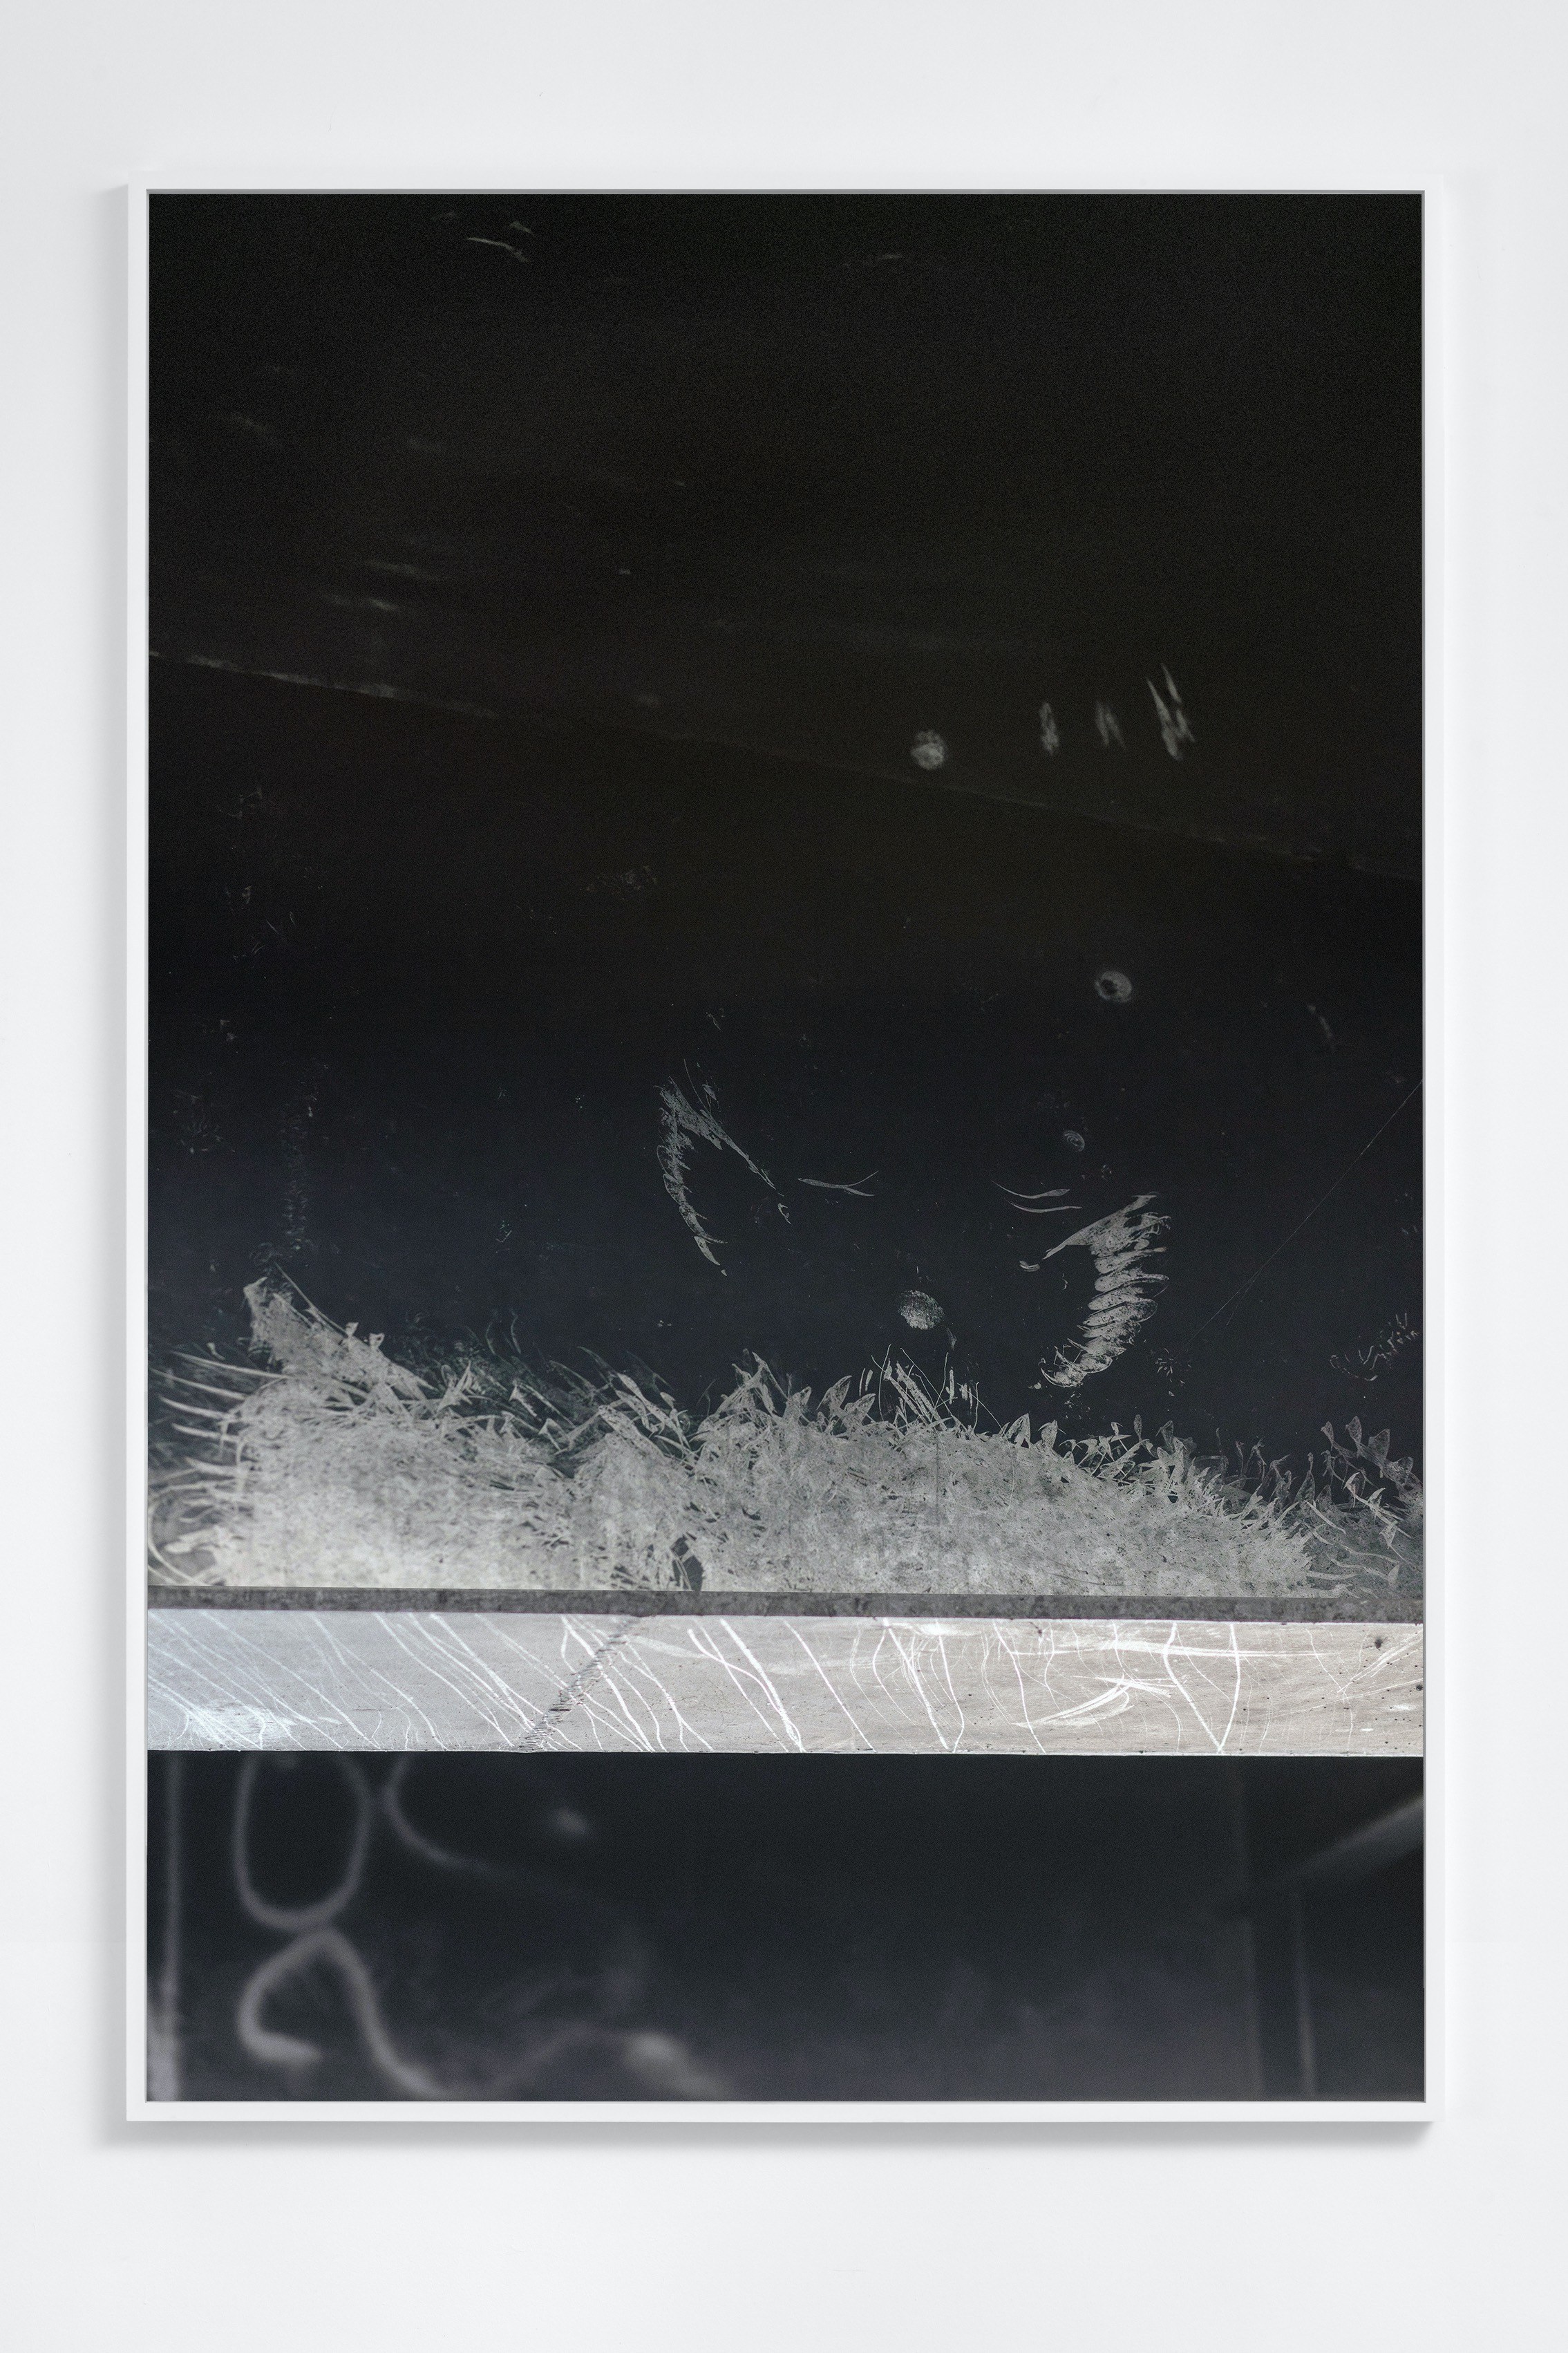 Stelios Kallinikou, img#3 (feather paradox), 2019, archival pigment print, 130 x 90 cm